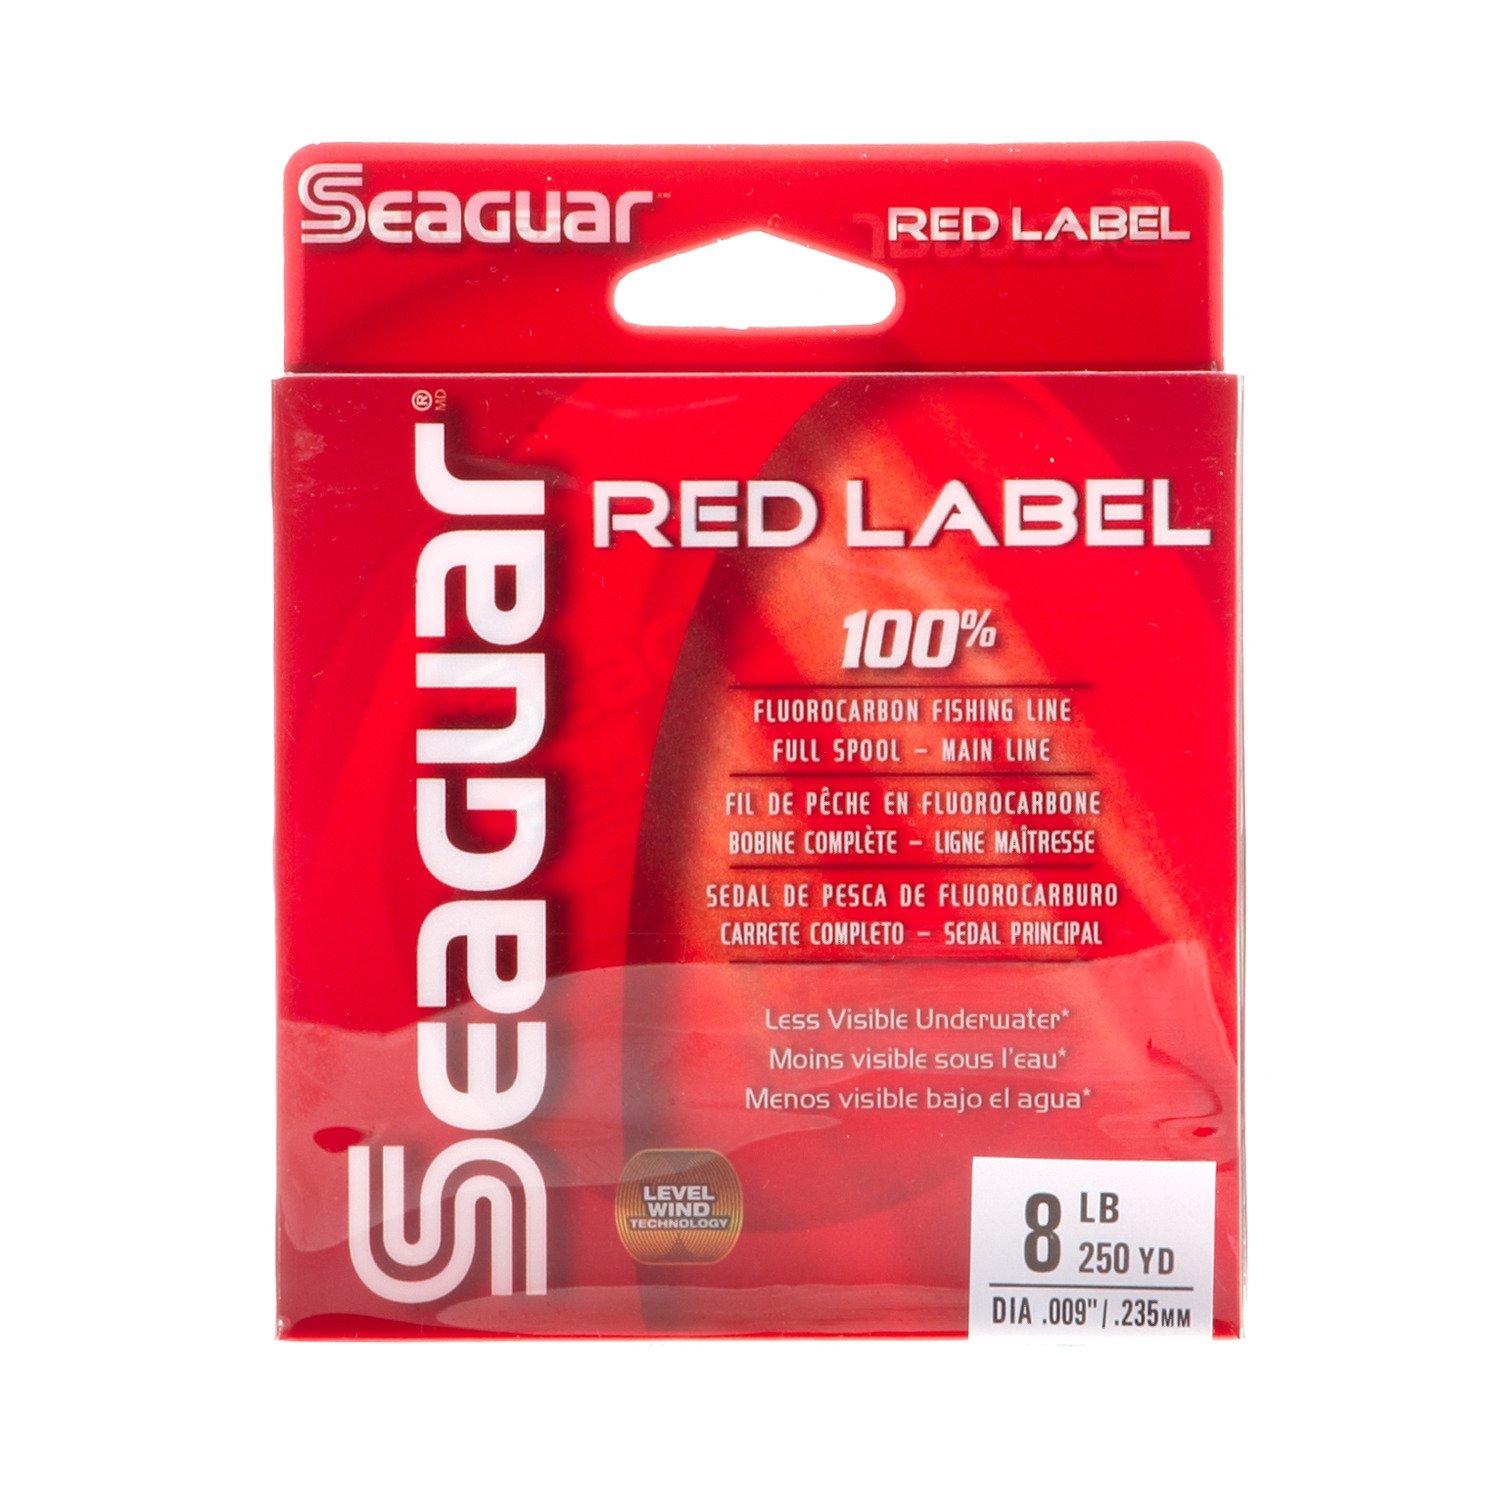 Seaguar® Red Label 8 lb. - 250 yards Fluorocarbon Fishing Line